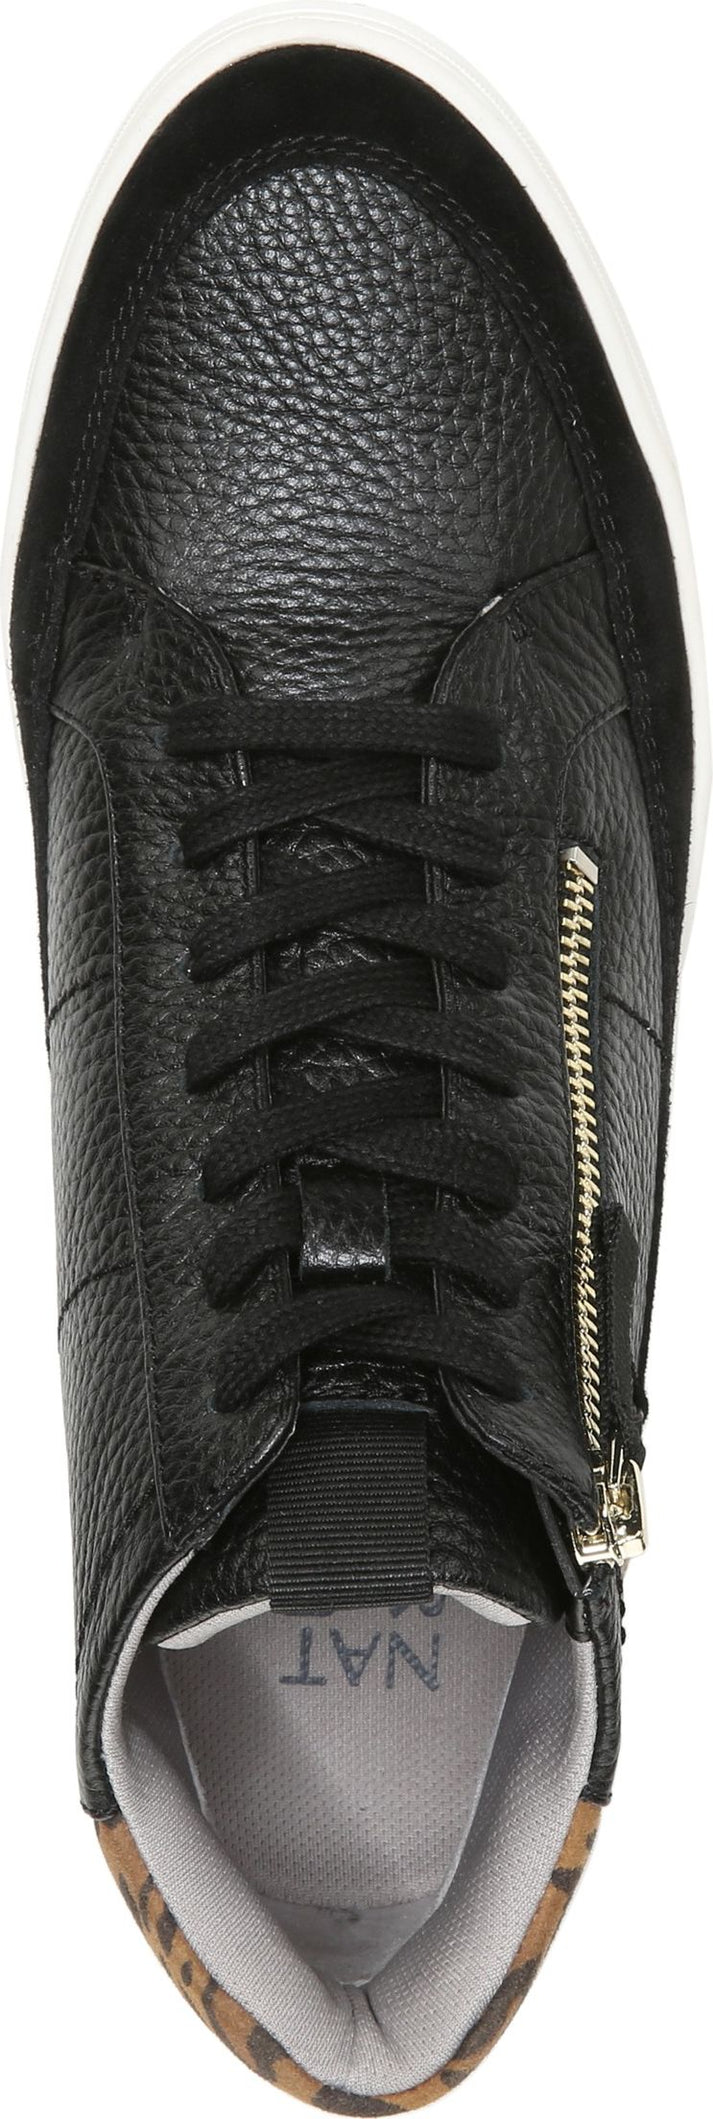 Naturalizer Shoes Hadley Hi Black Leather Suede